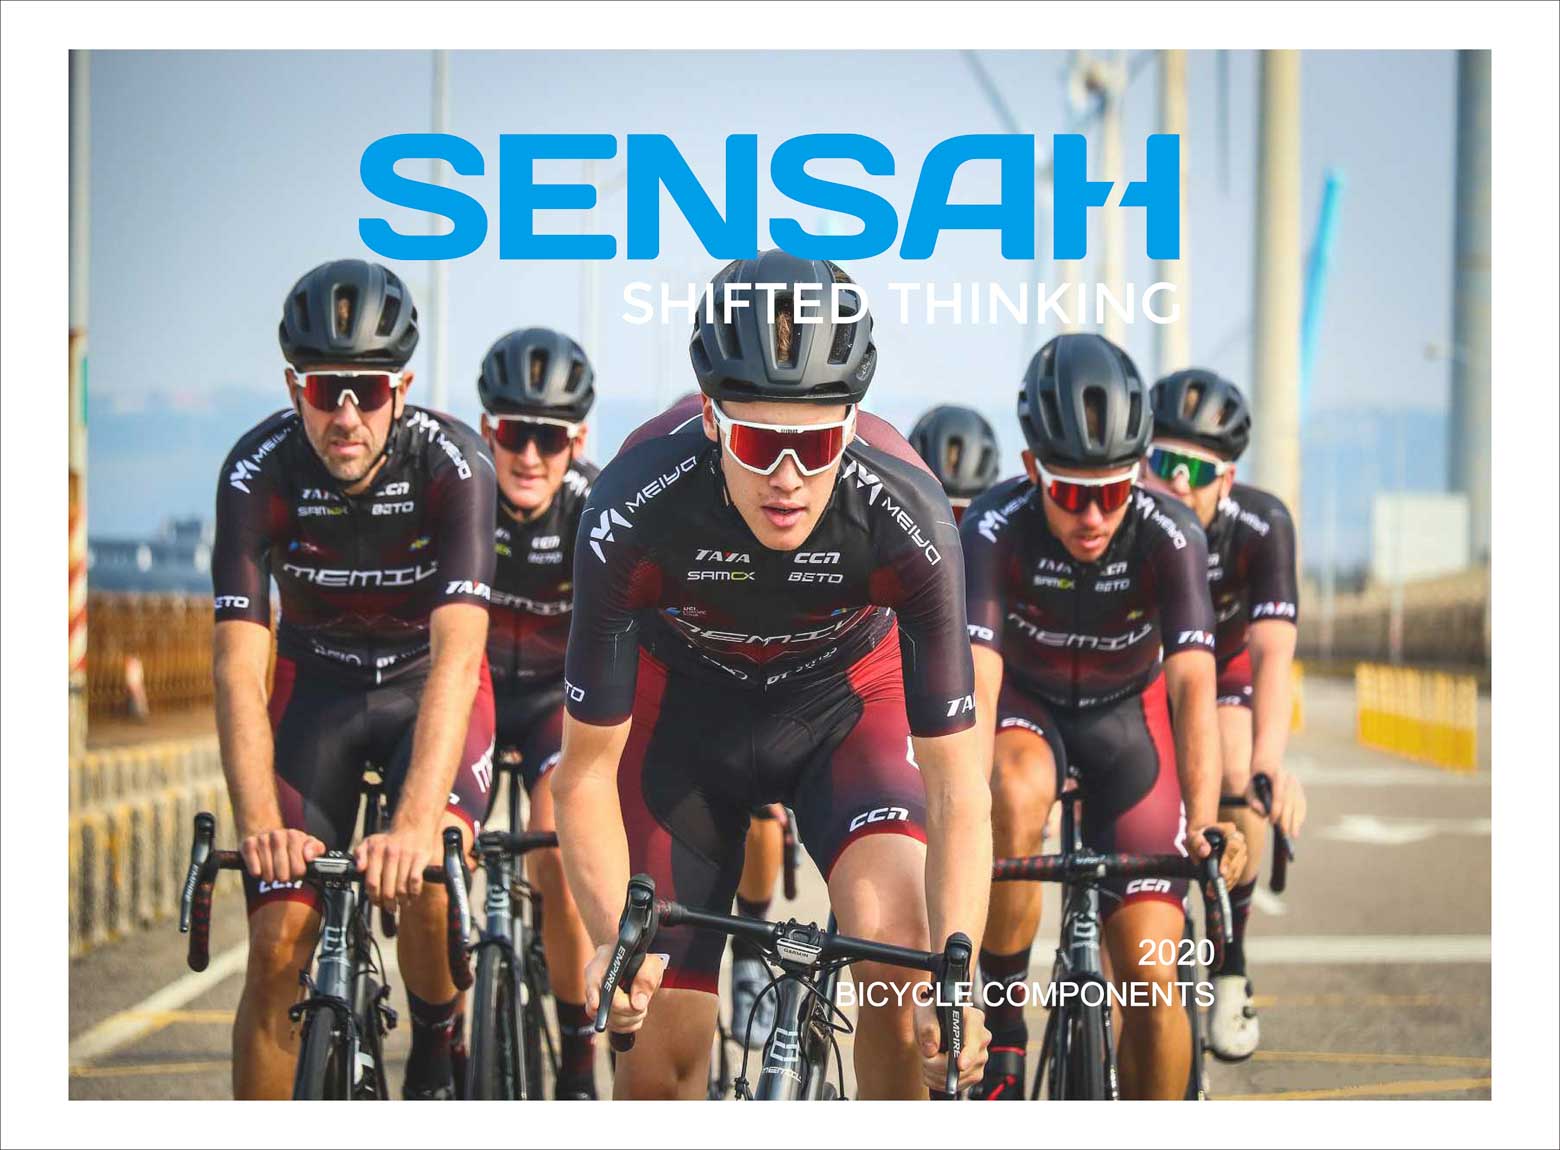 Sensah Bicycle Components 2020 - front cover main image